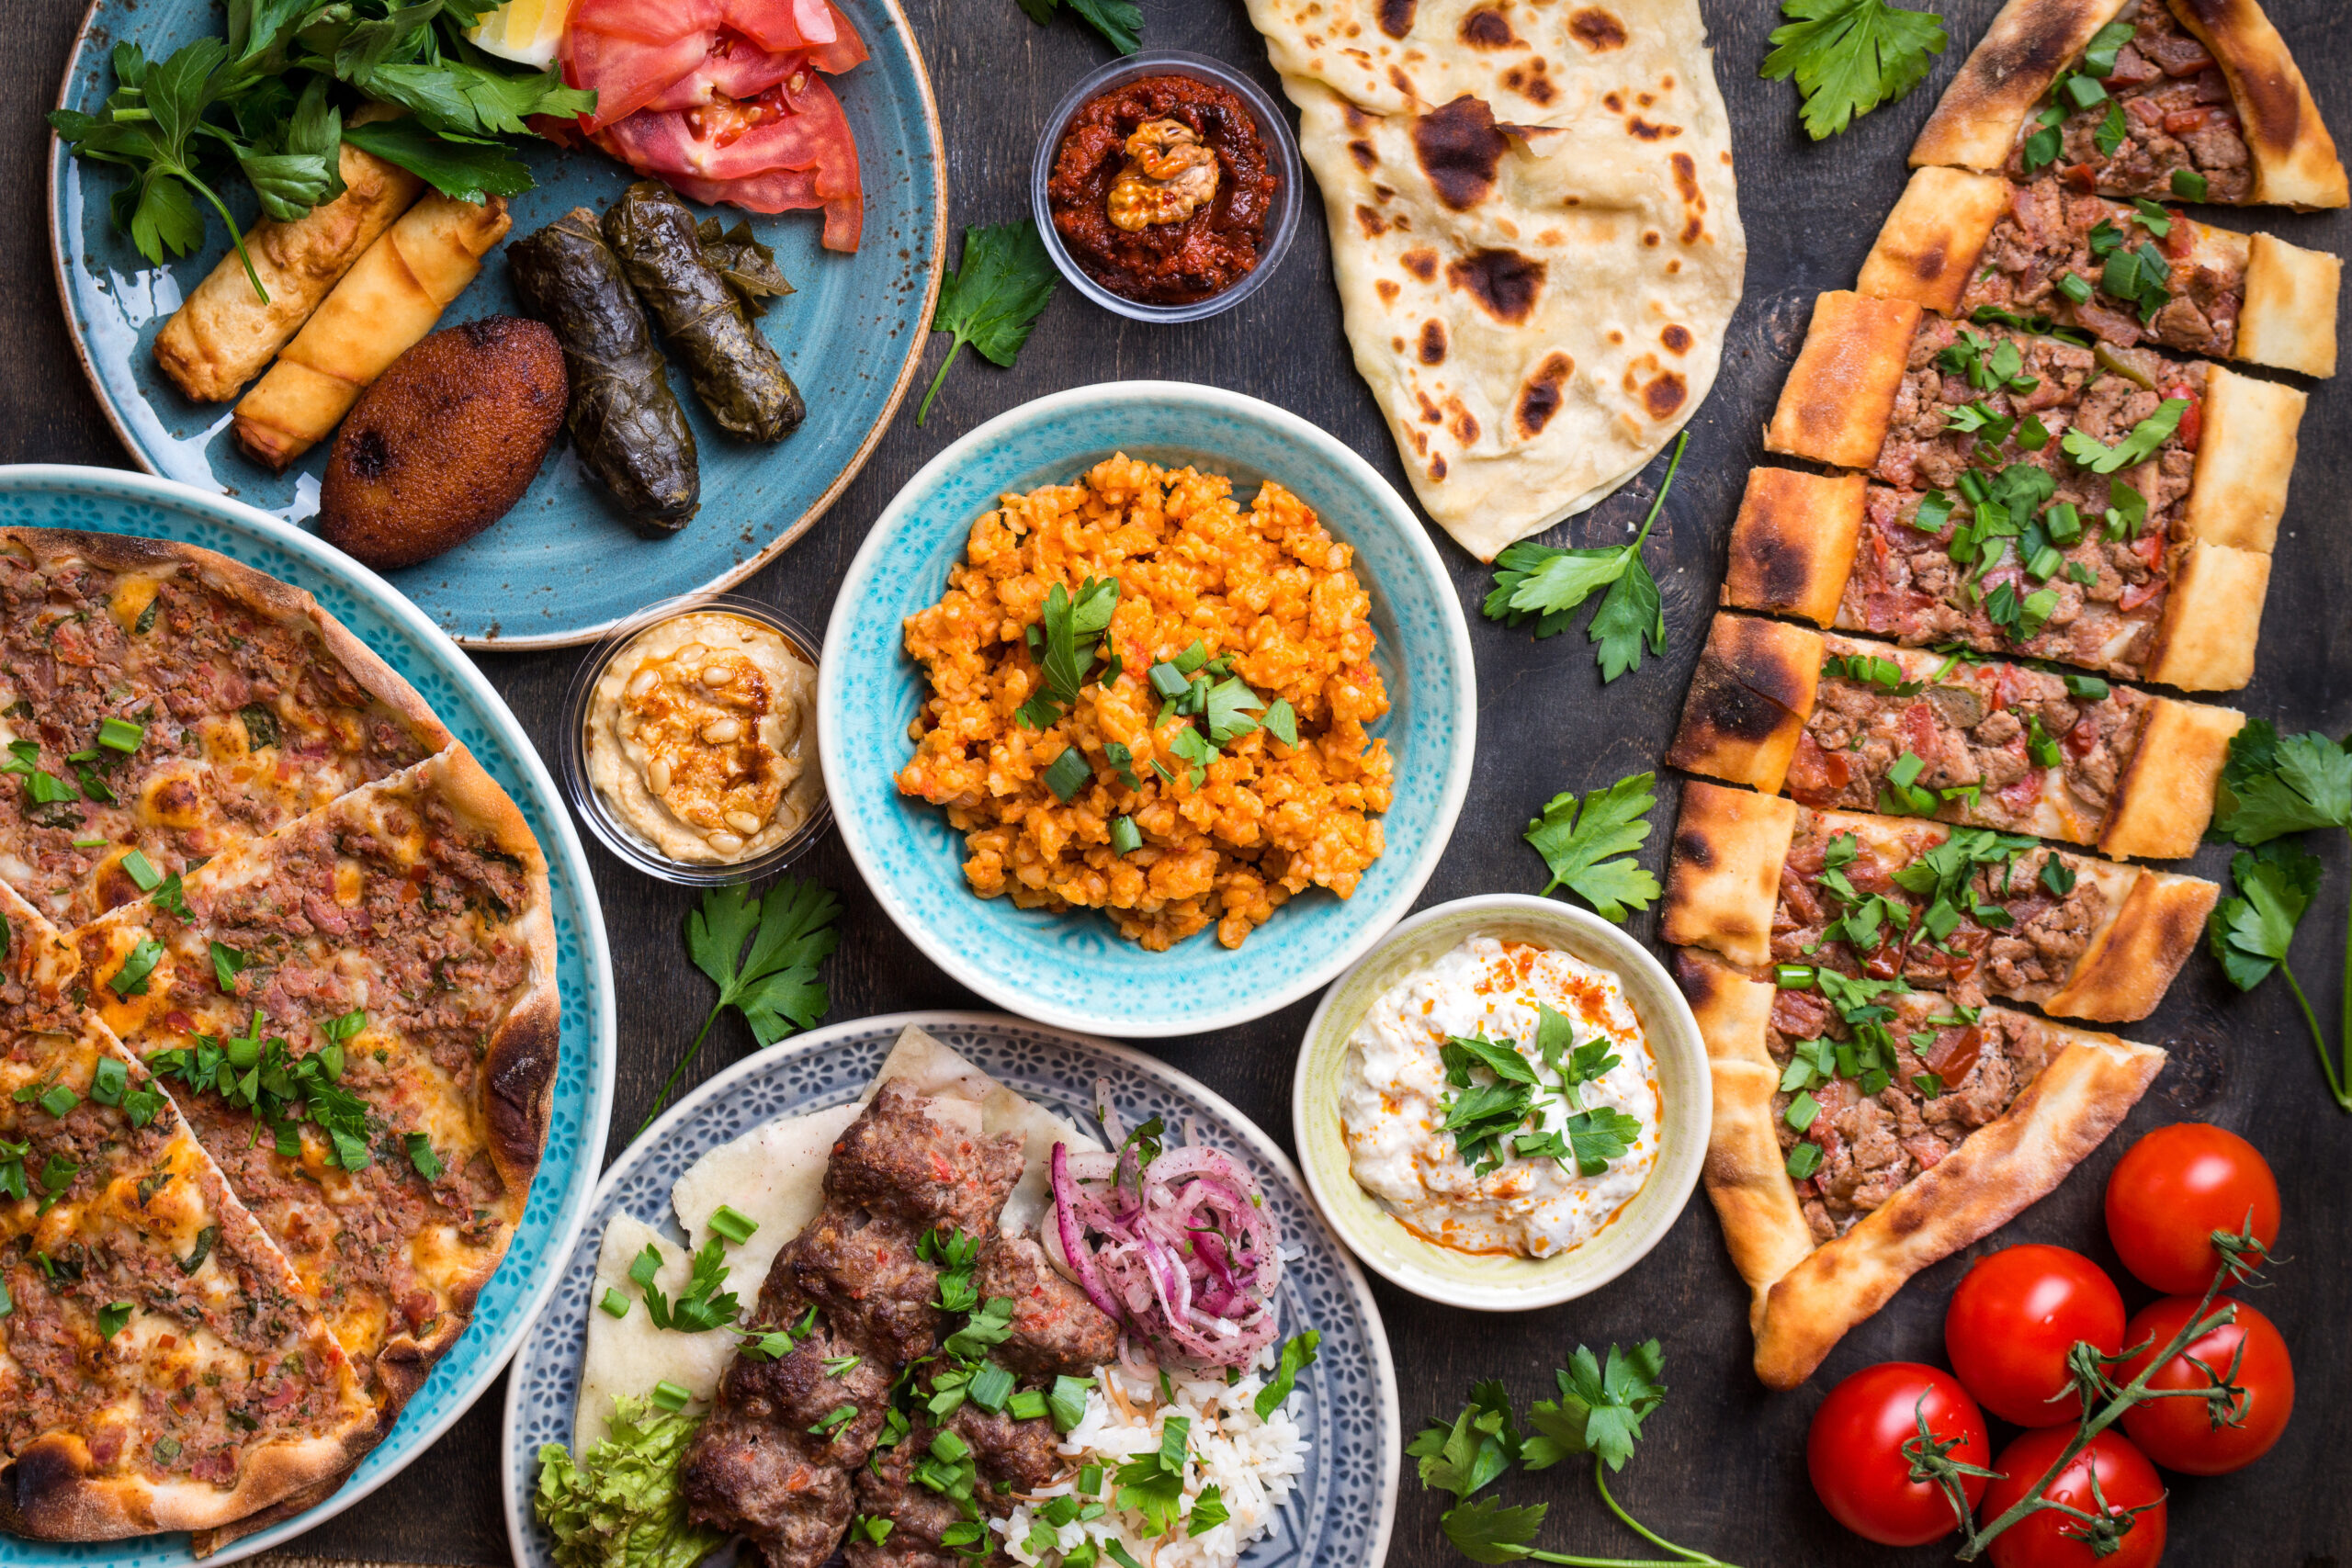 Turkish cuisine specialties for Eid al-Adha